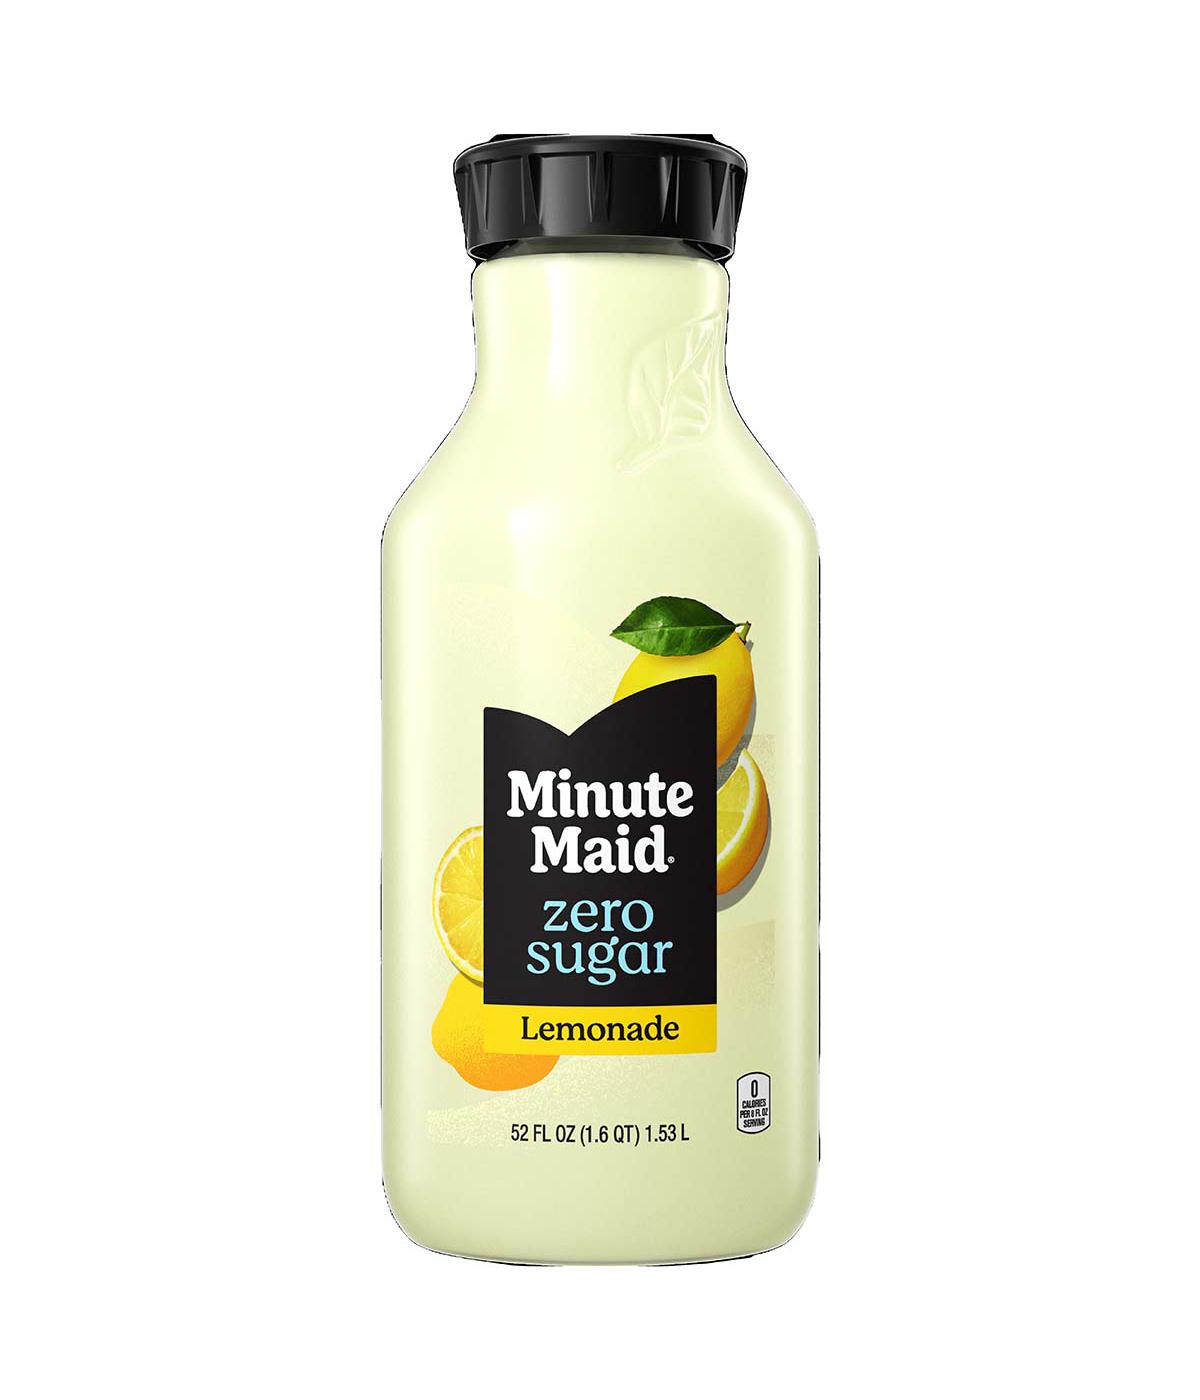 Minute Maid Zero Sugar Lemonade; image 1 of 2